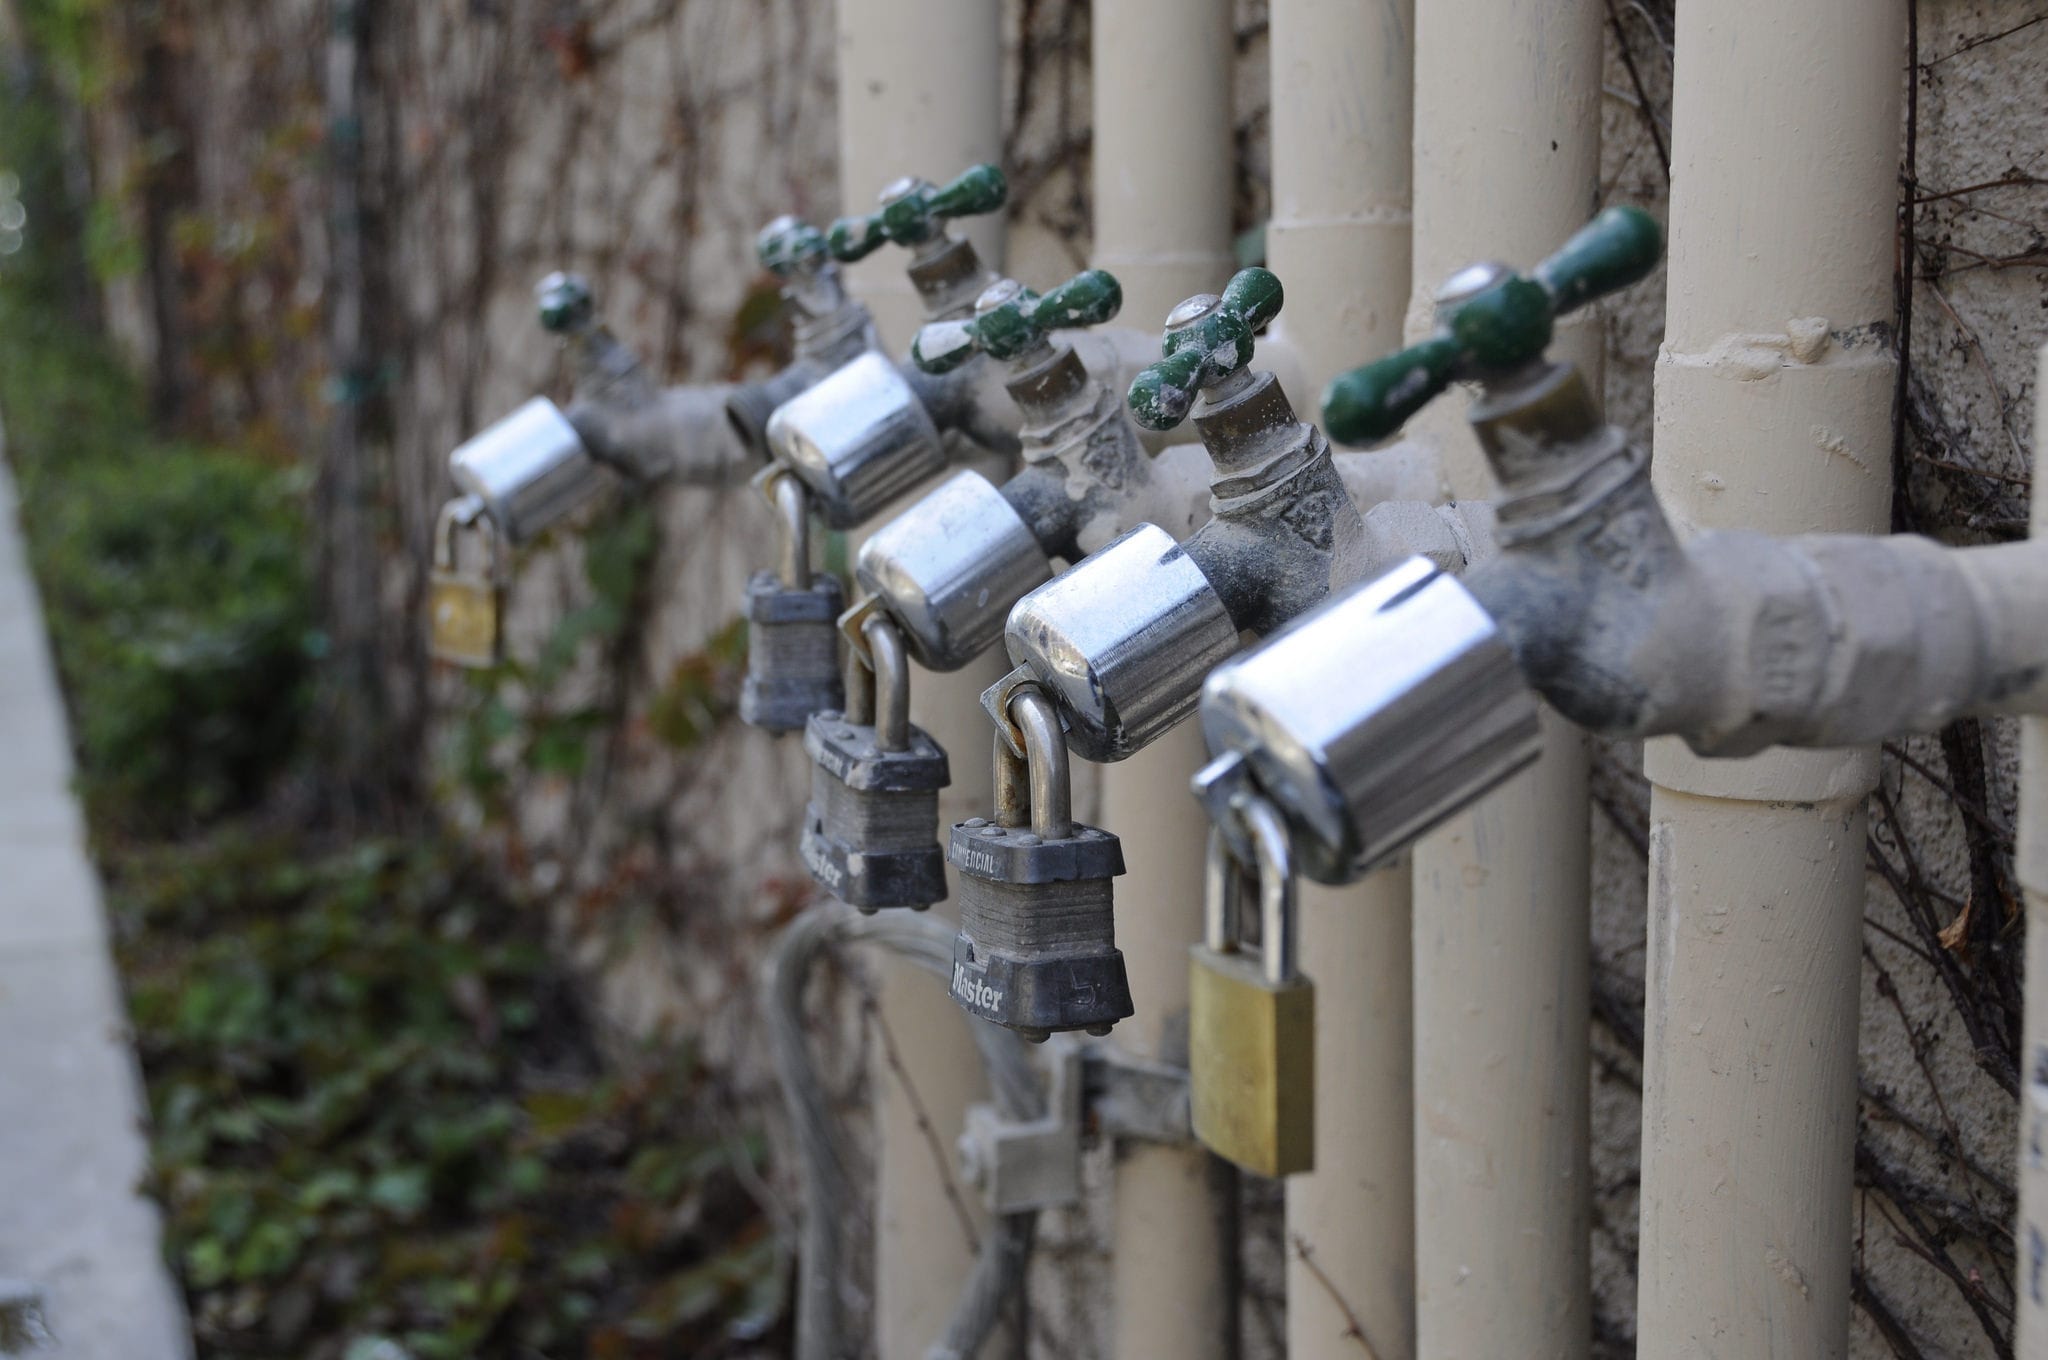 Water shortage, padlocked faucets; image courtesy Andrew Hart via Flickr.com, CC BY-SA 2.0, no changes.